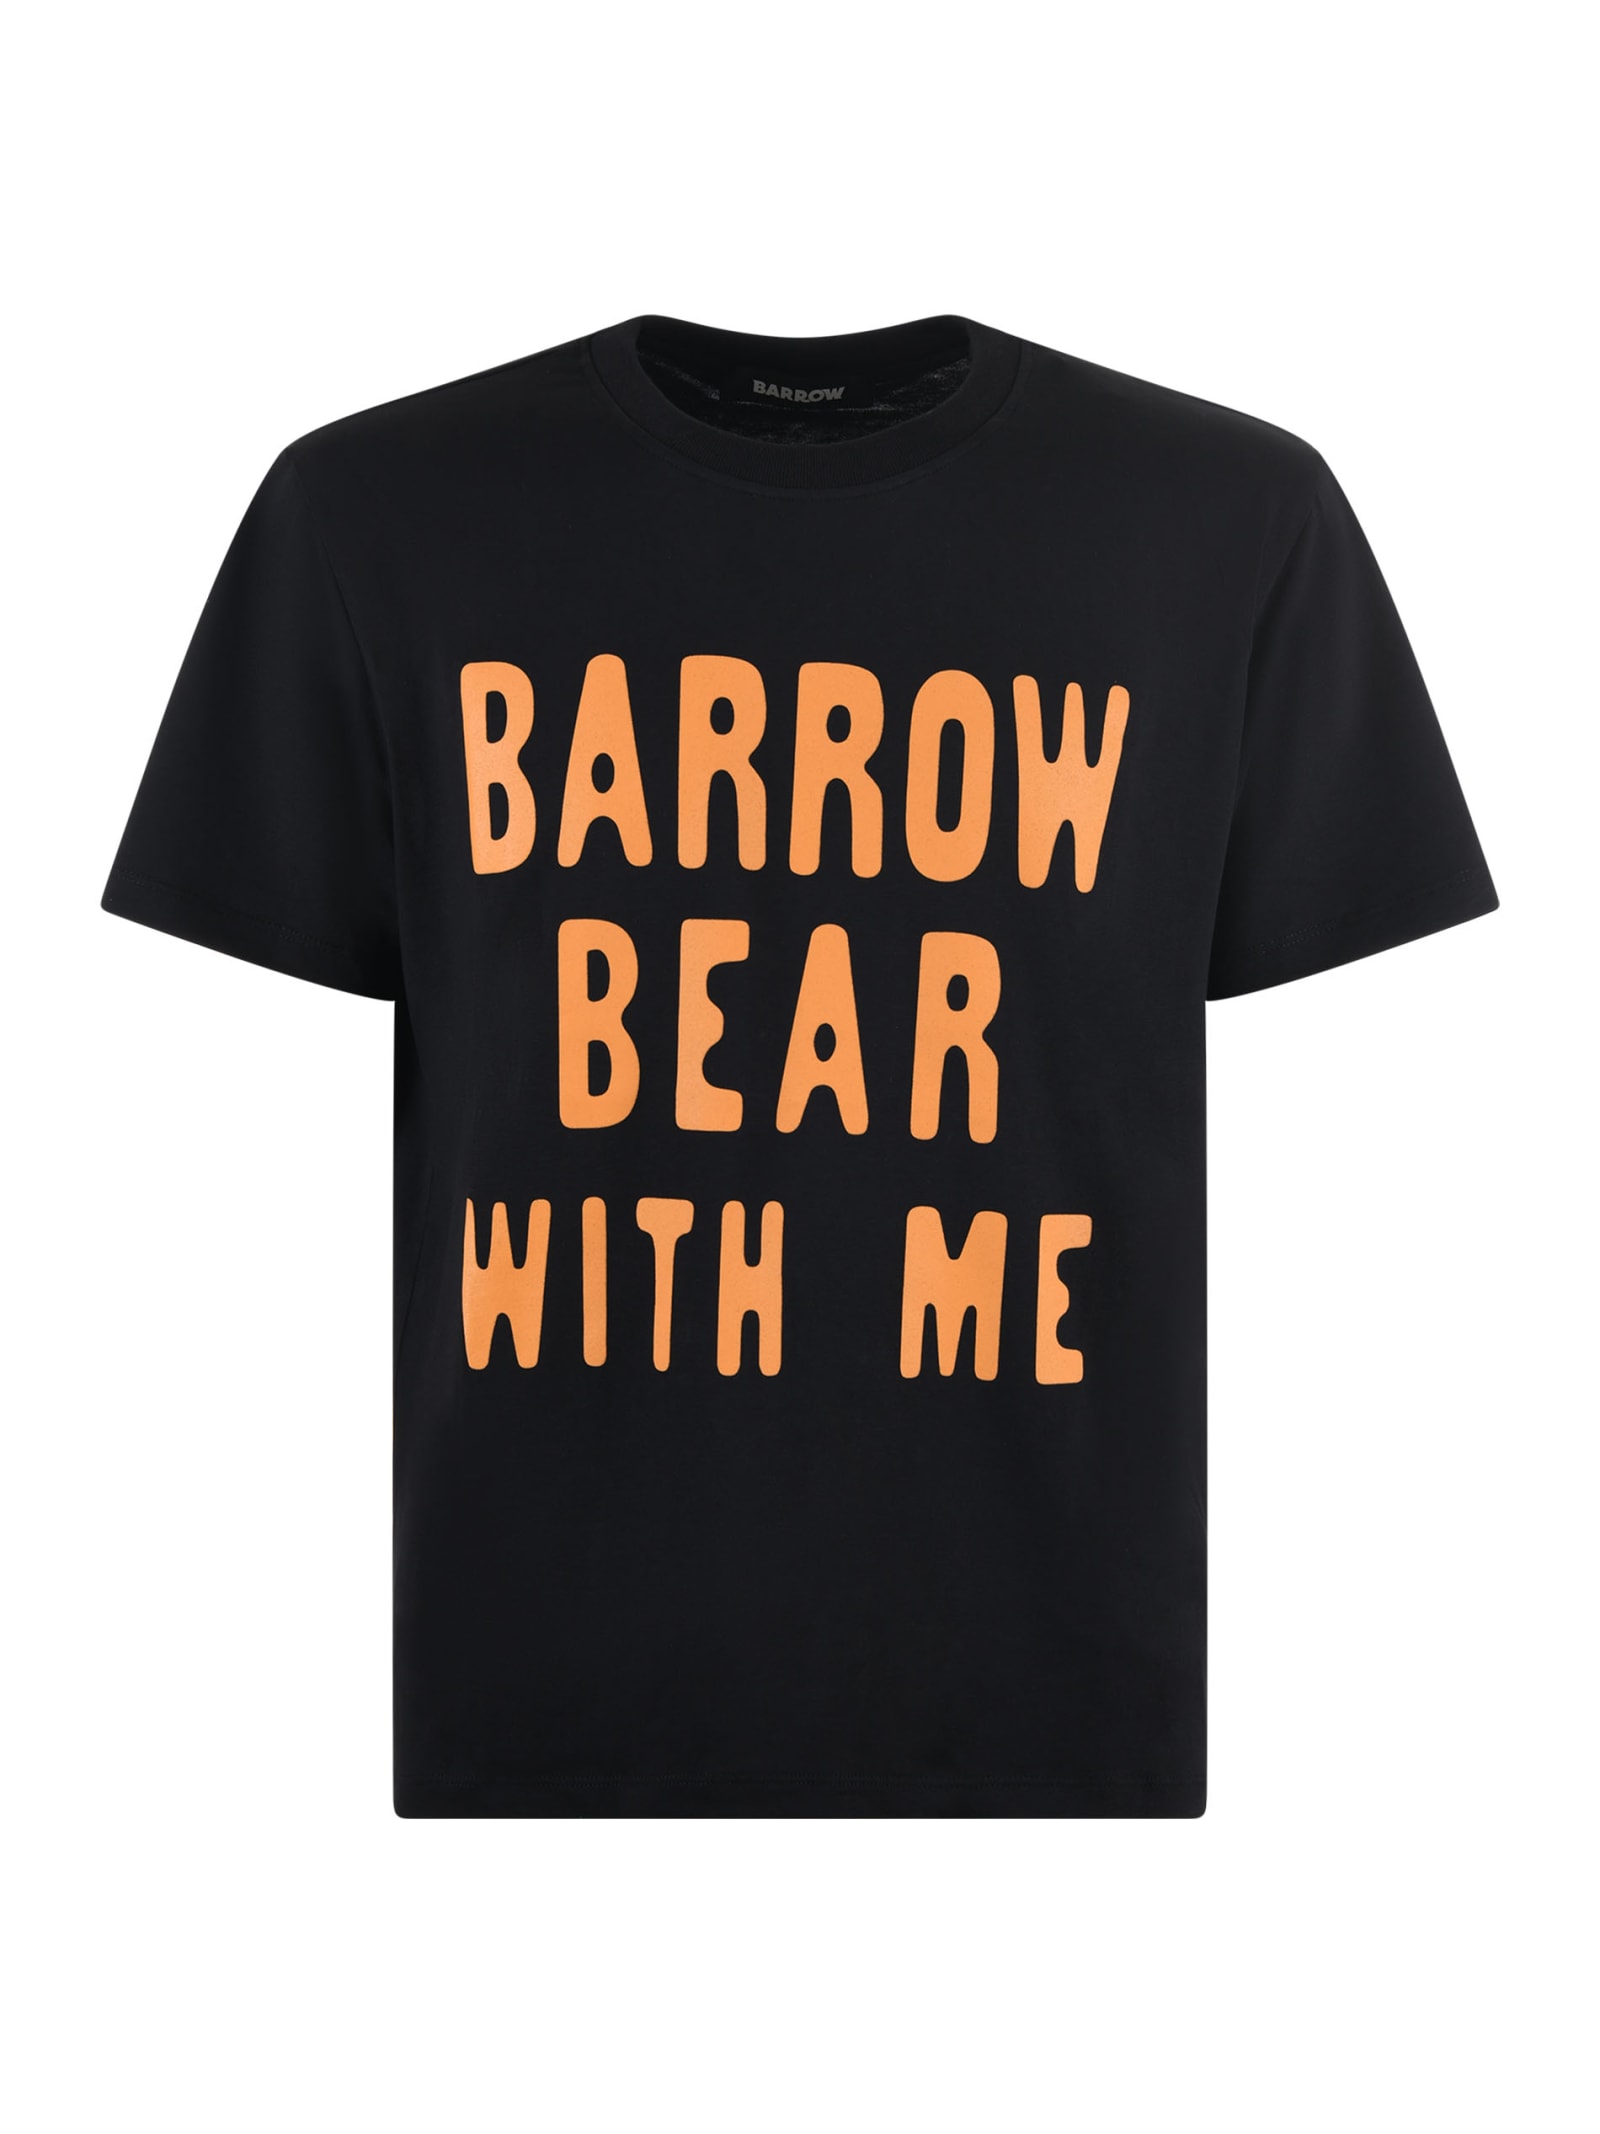 Barrow T-shirt In Black